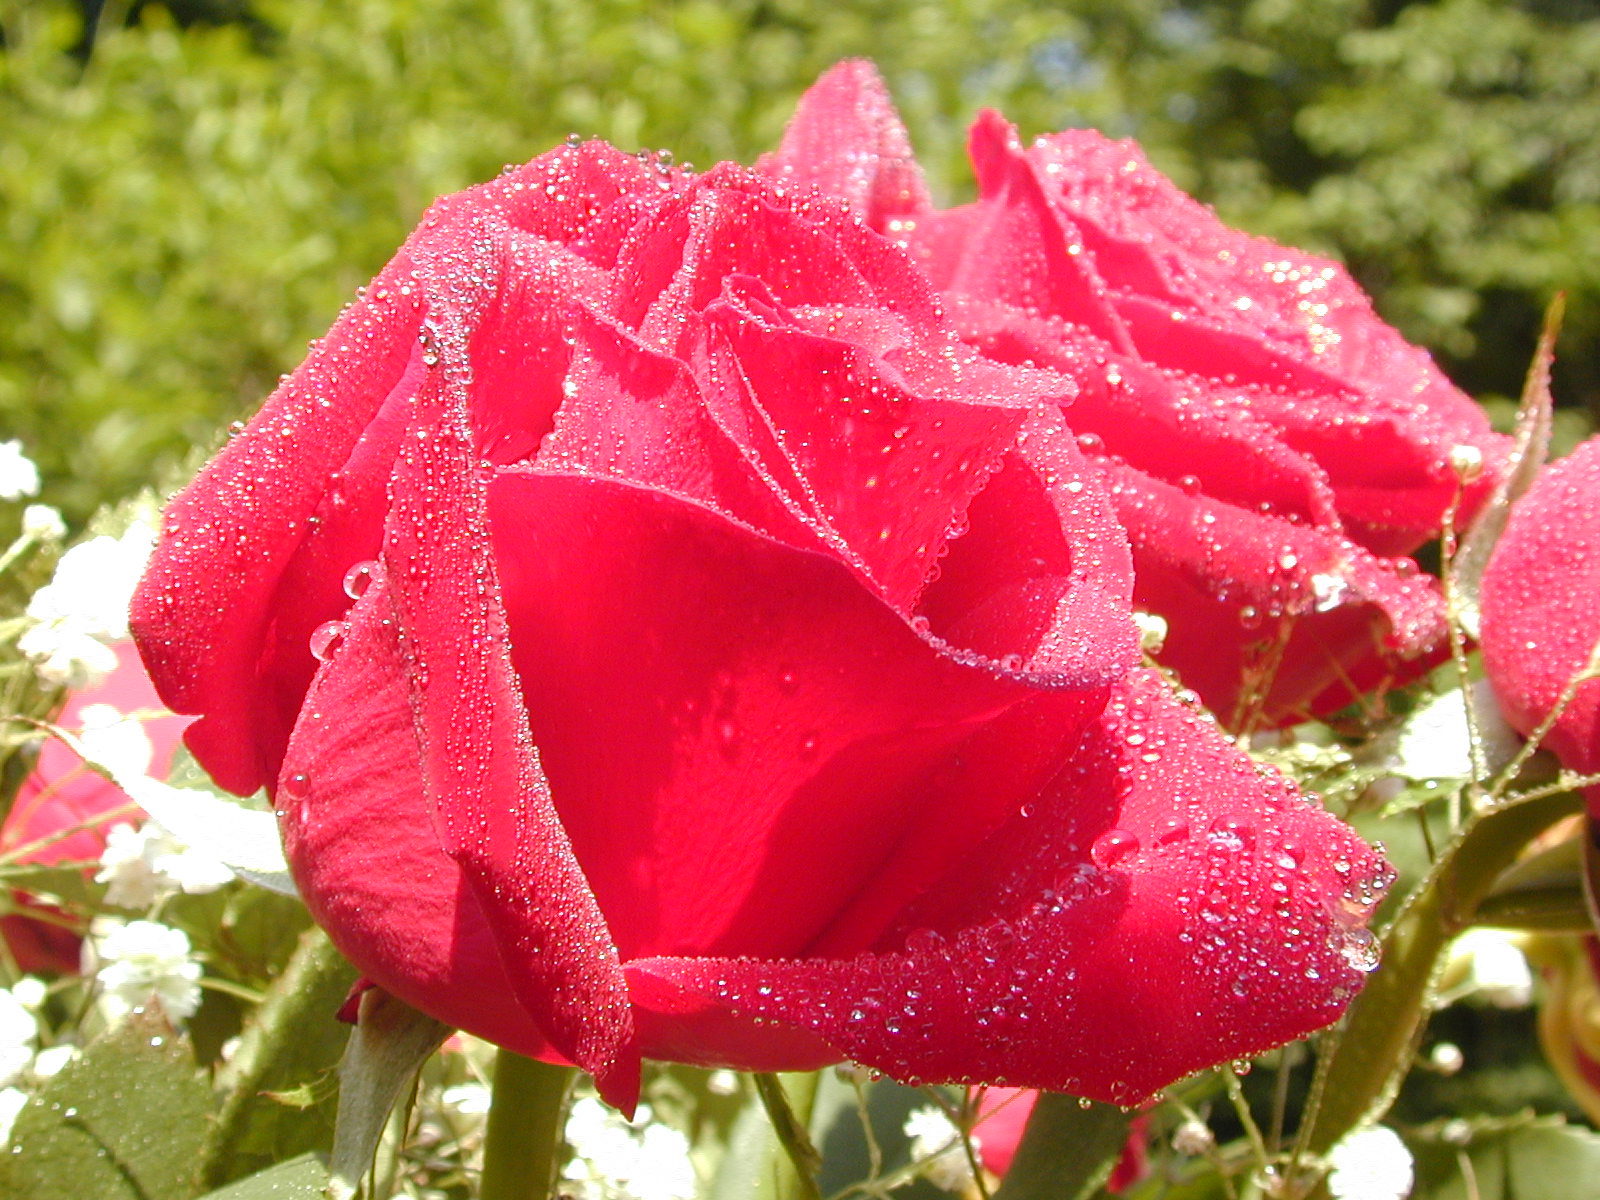 beauty rose flower